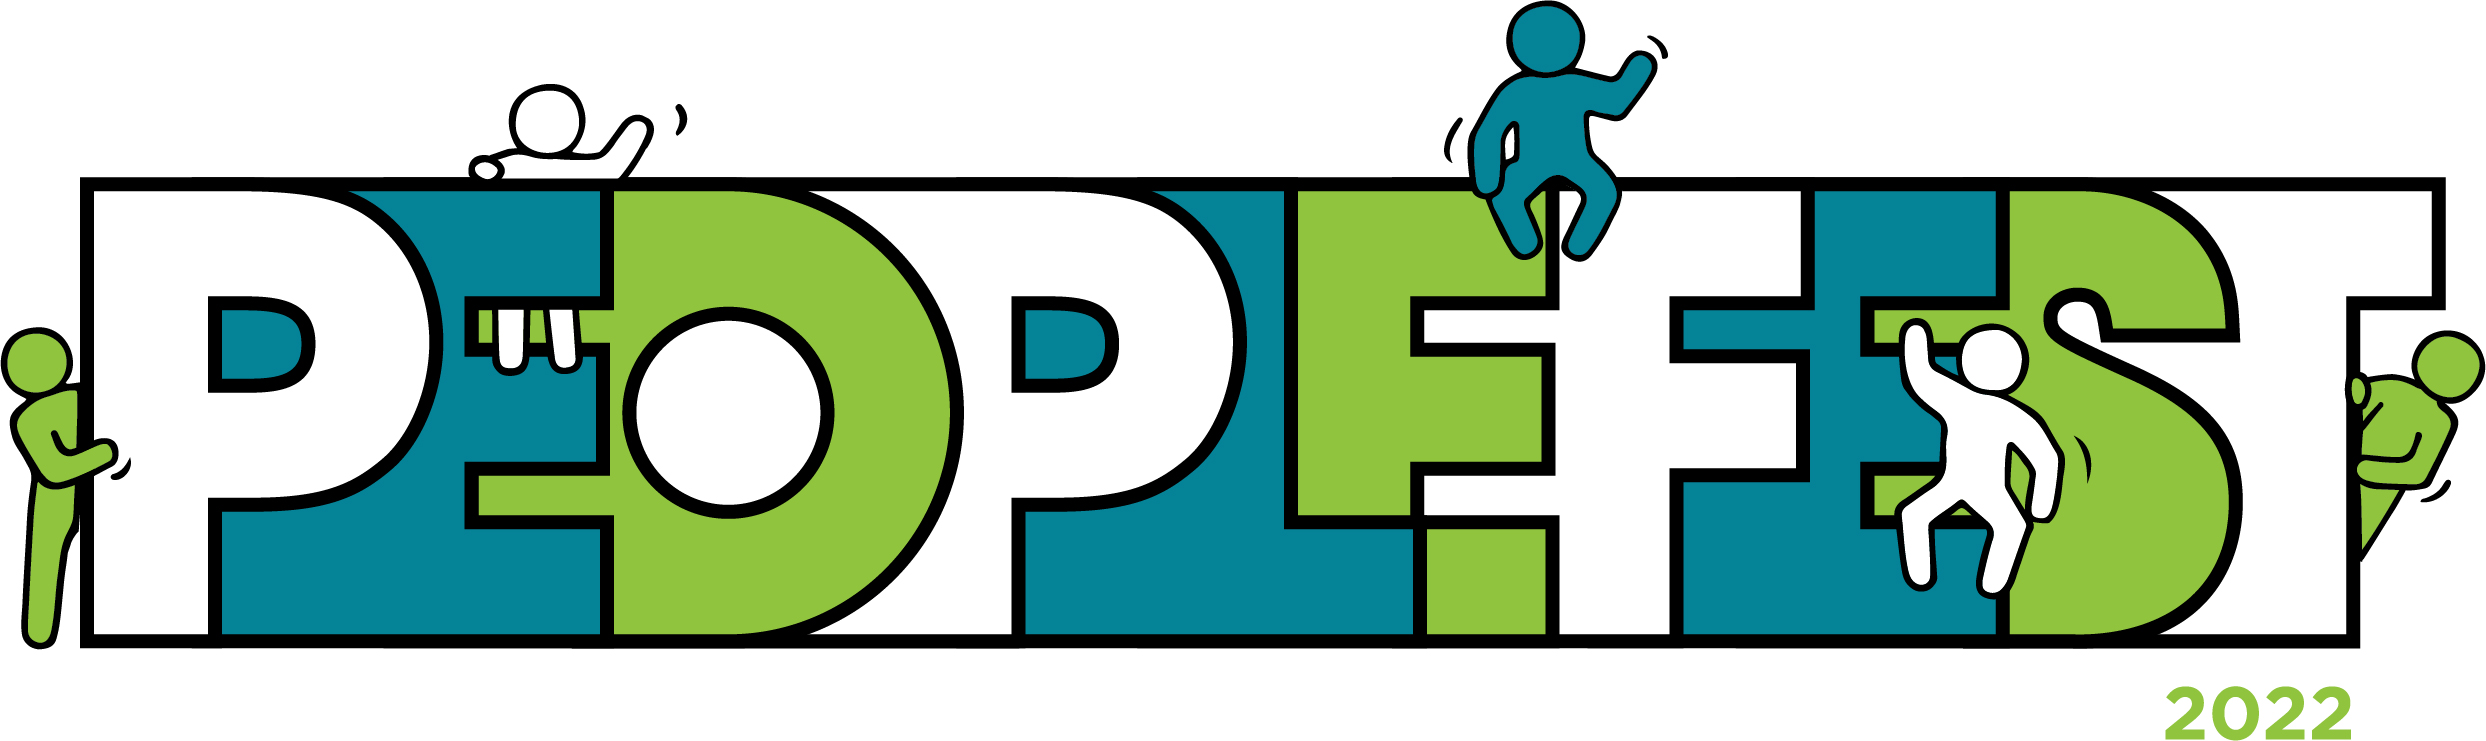 Peoplefest Logo[46742]